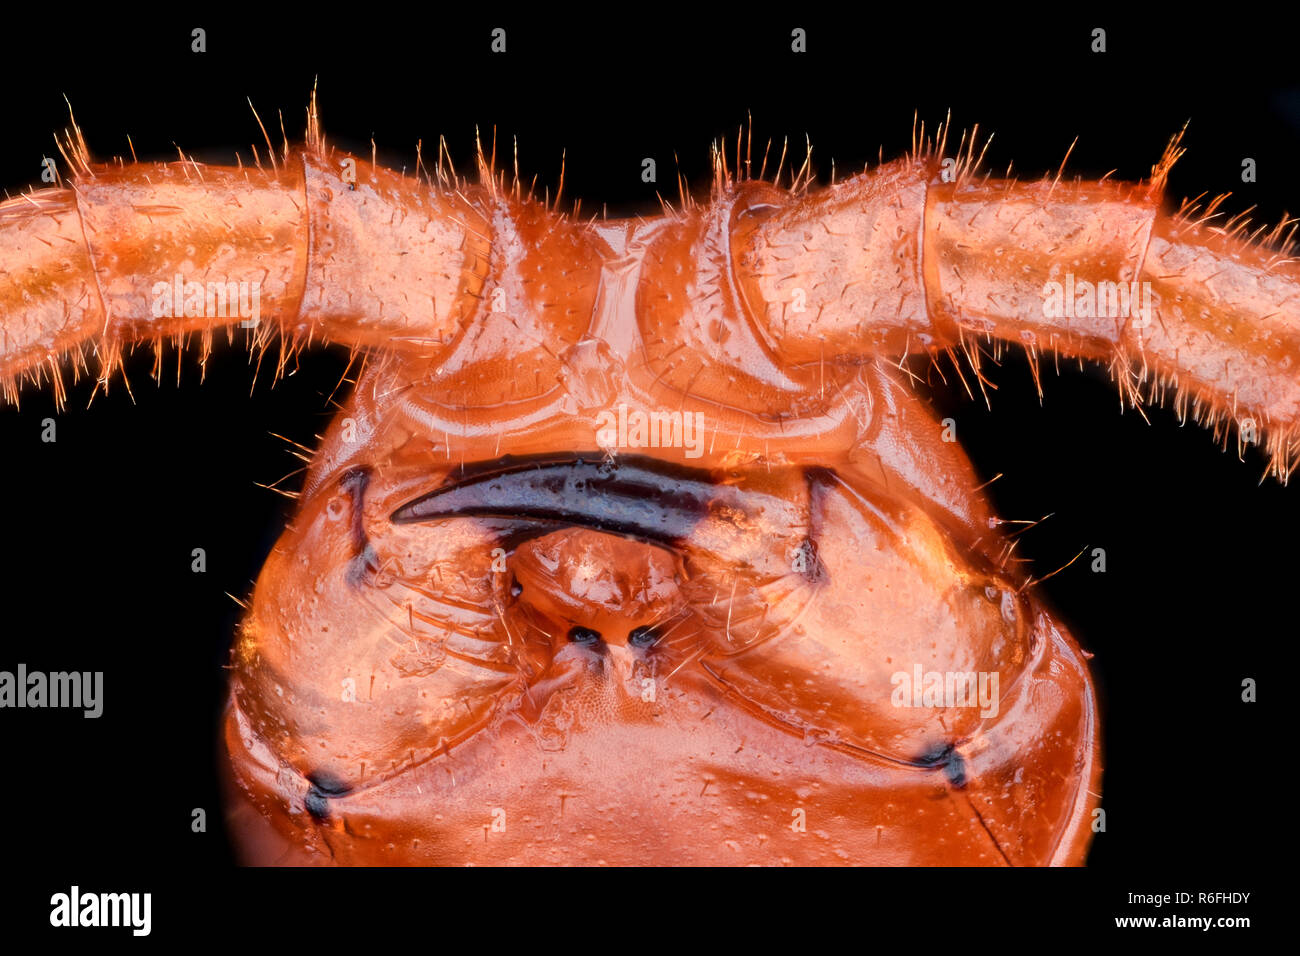 Extreme magnification - Western Yellow Centipede (Stigmatogaster subterranea) Stock Photo